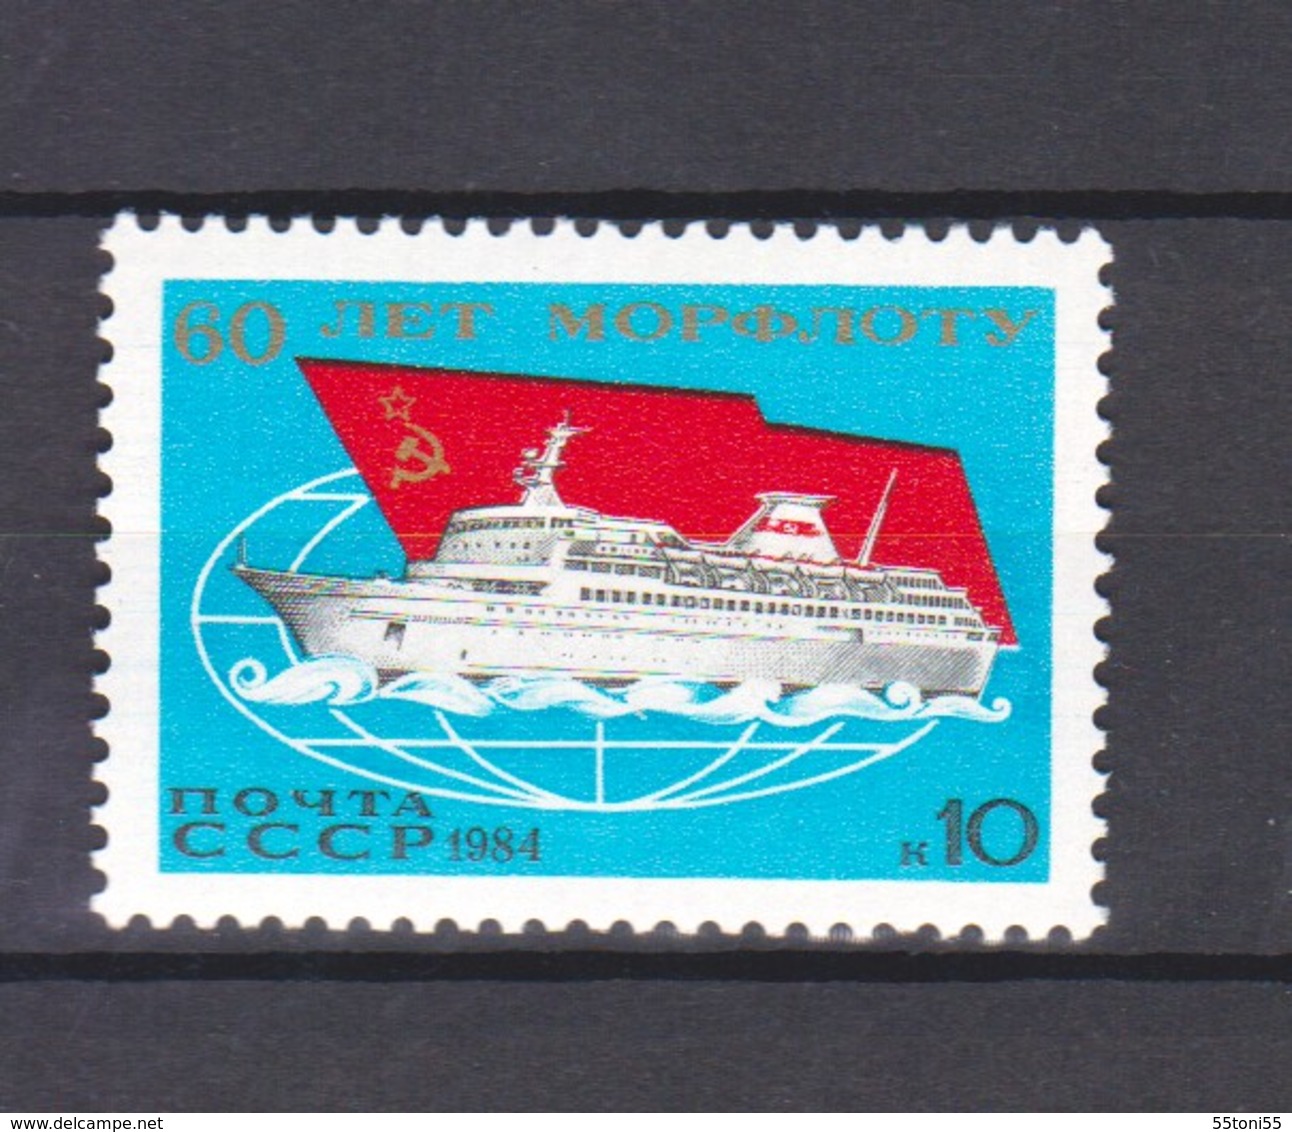 1984 60th Ann. Of Morflot.-Ships   1v.-MNH  USSR - Nuevos